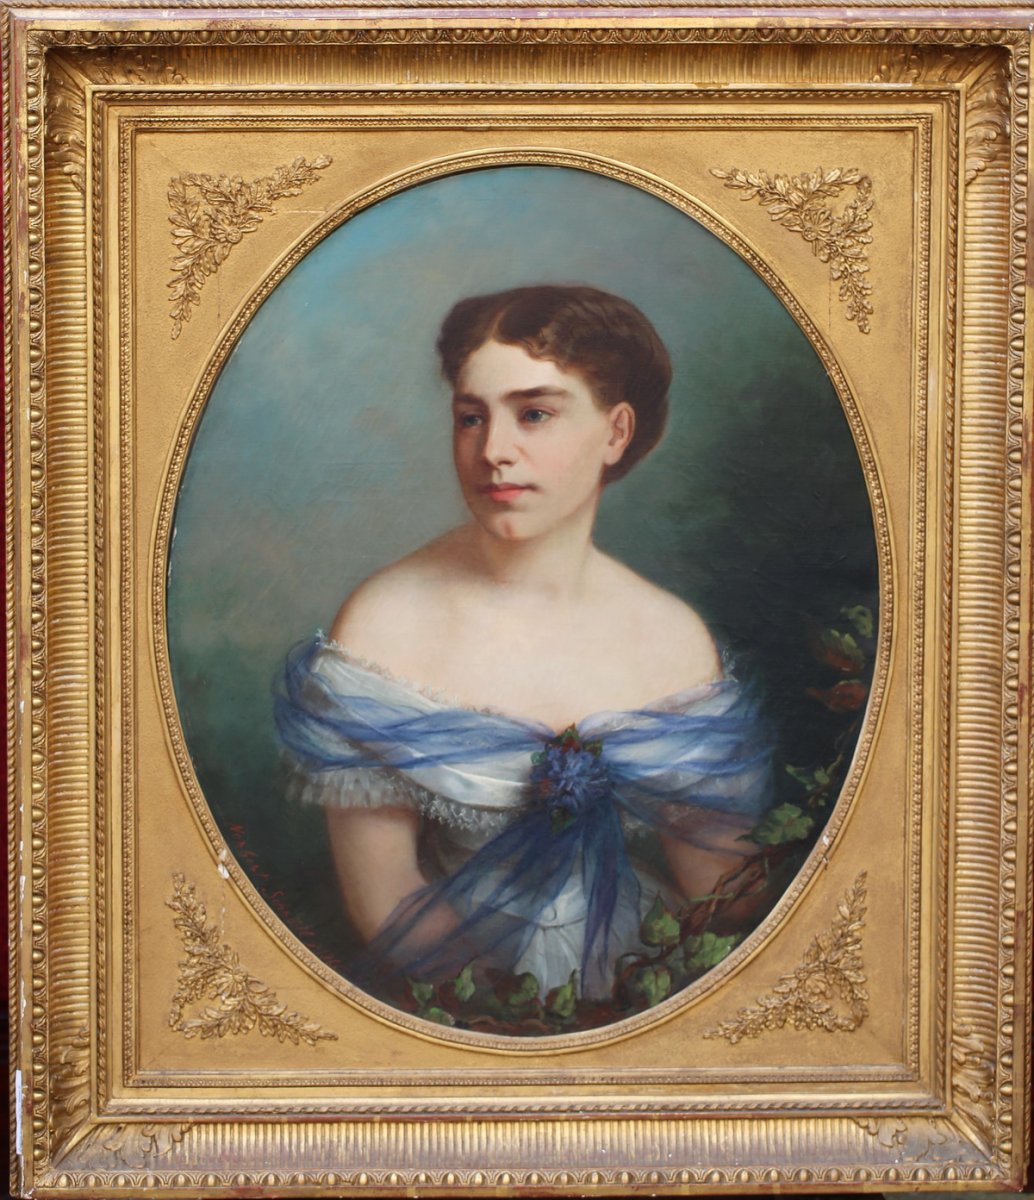 Schrodl Norbert 1842-1912  Portrait De Jeune Femme, Peinture De 1866